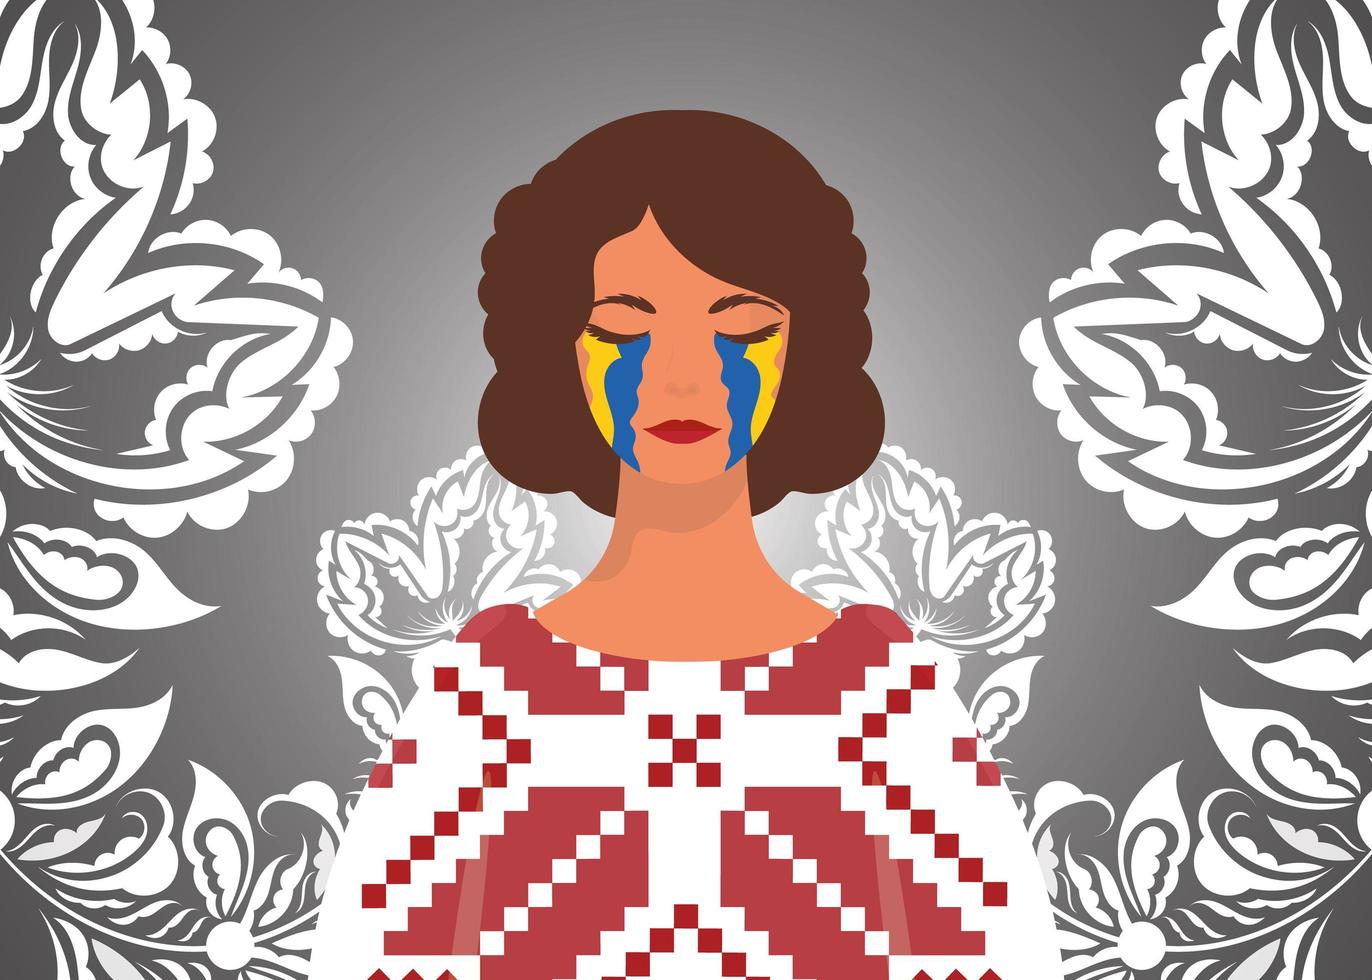 The girl sheds tears. Pray for Ukraine. Stop war. Vector illustration.